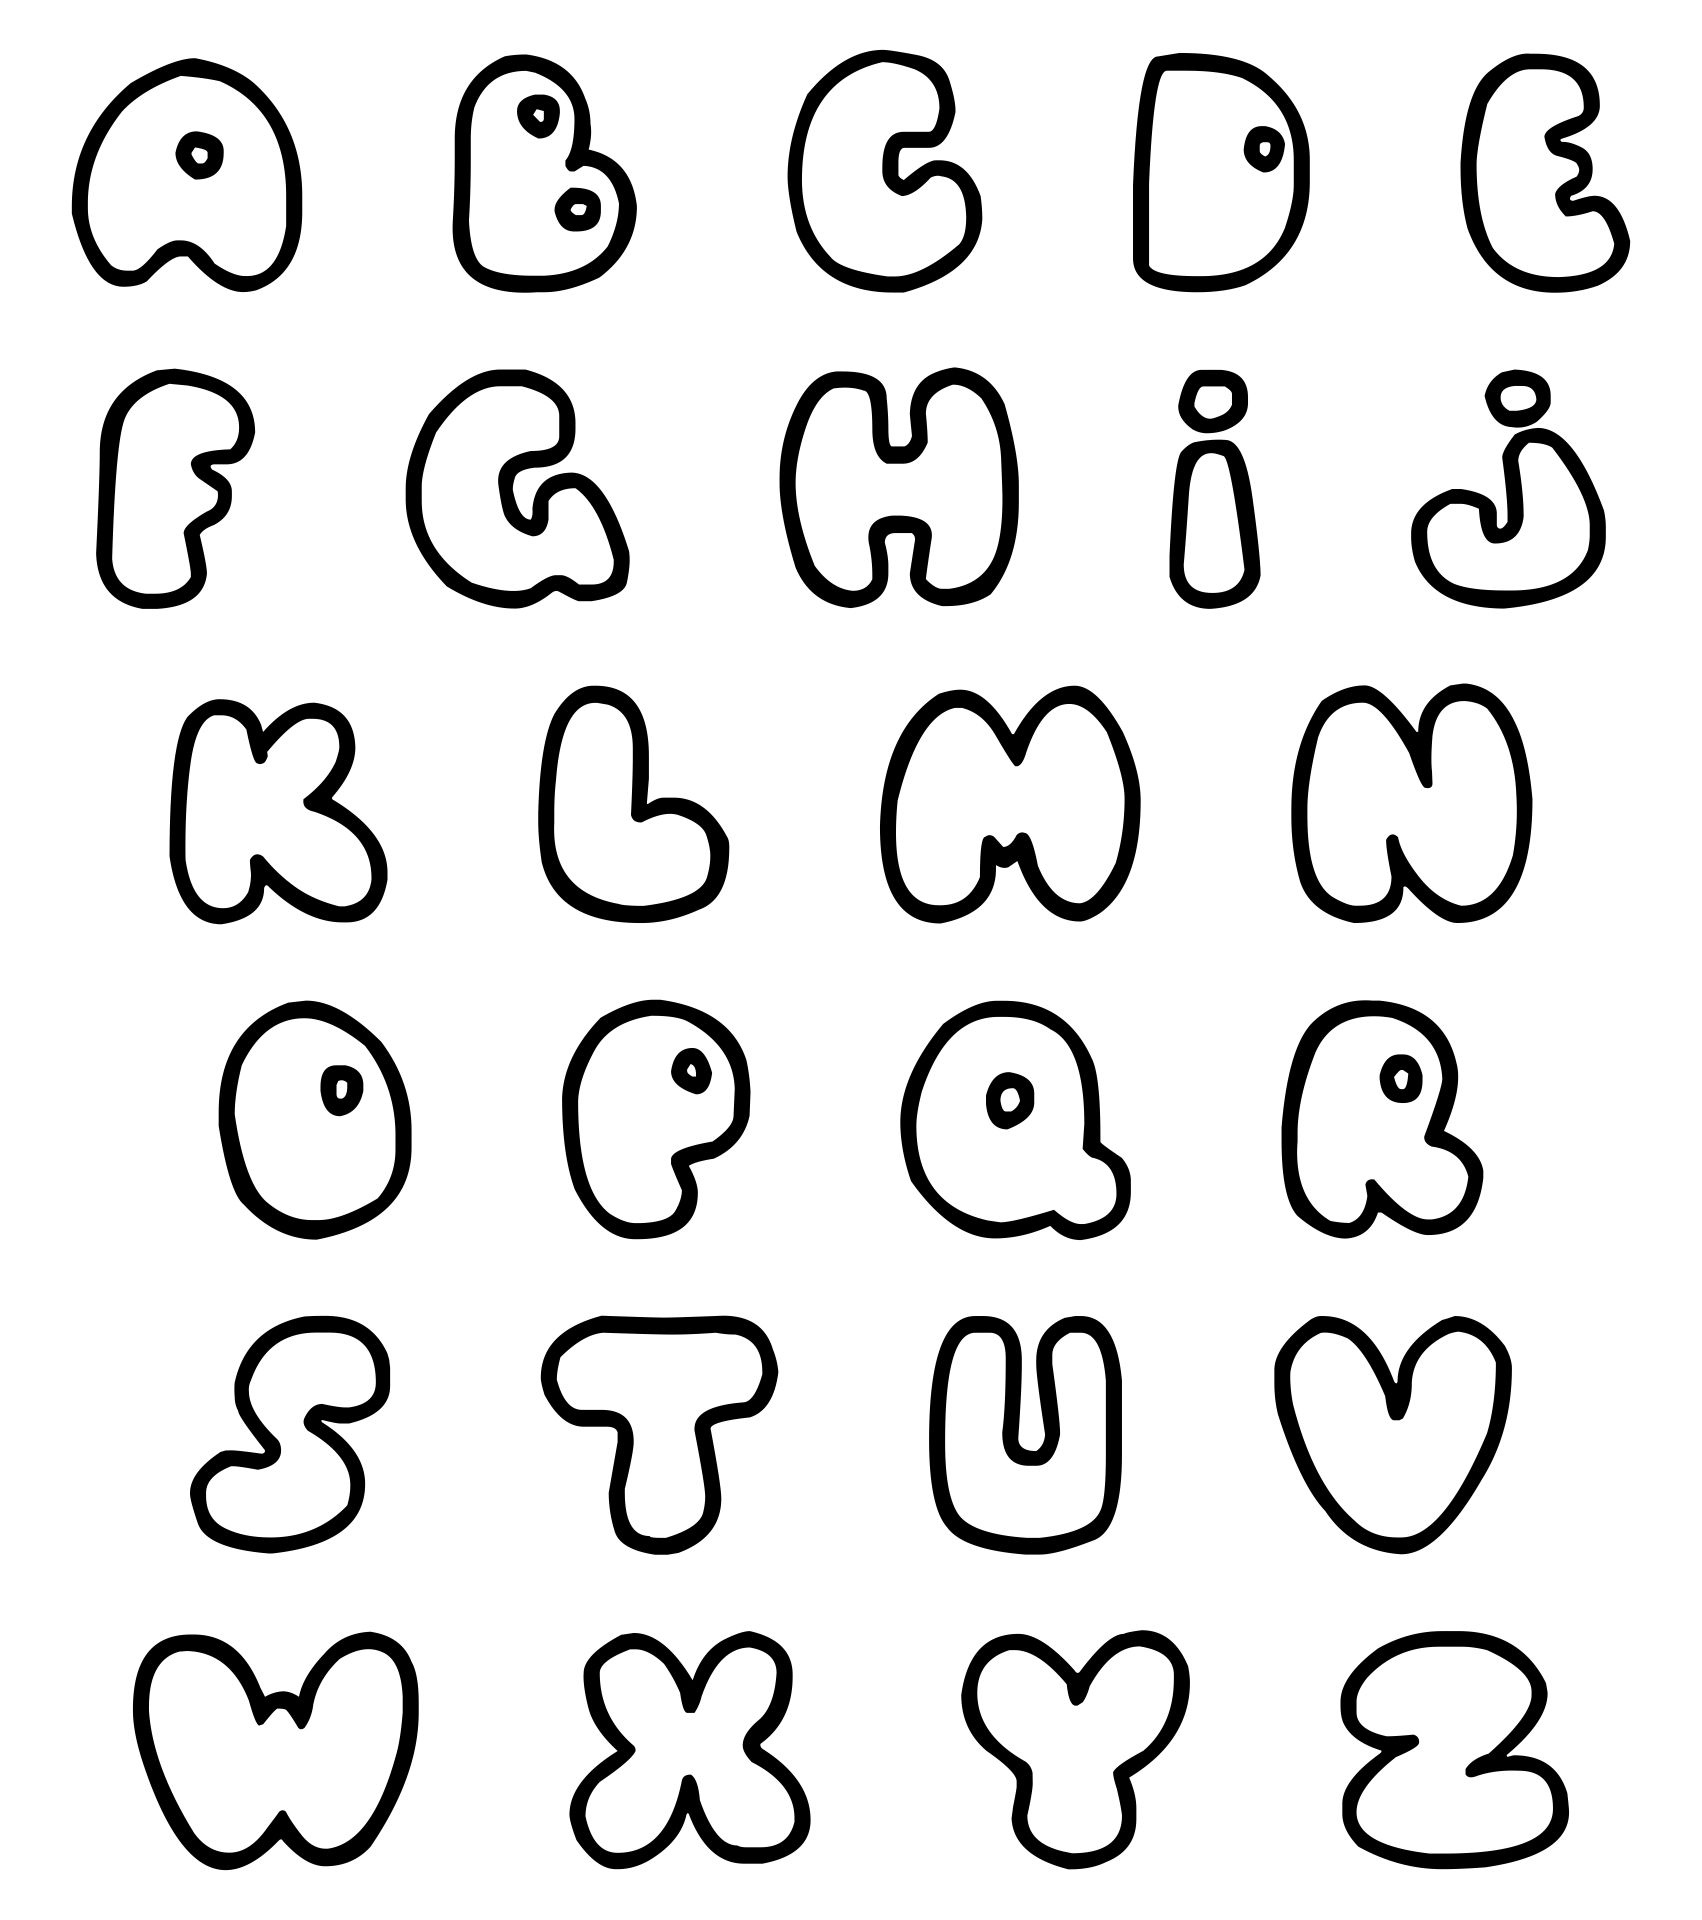 7 Best Images of Font Styles Alphabet Printable - 3D Graffiti Alphabet ...